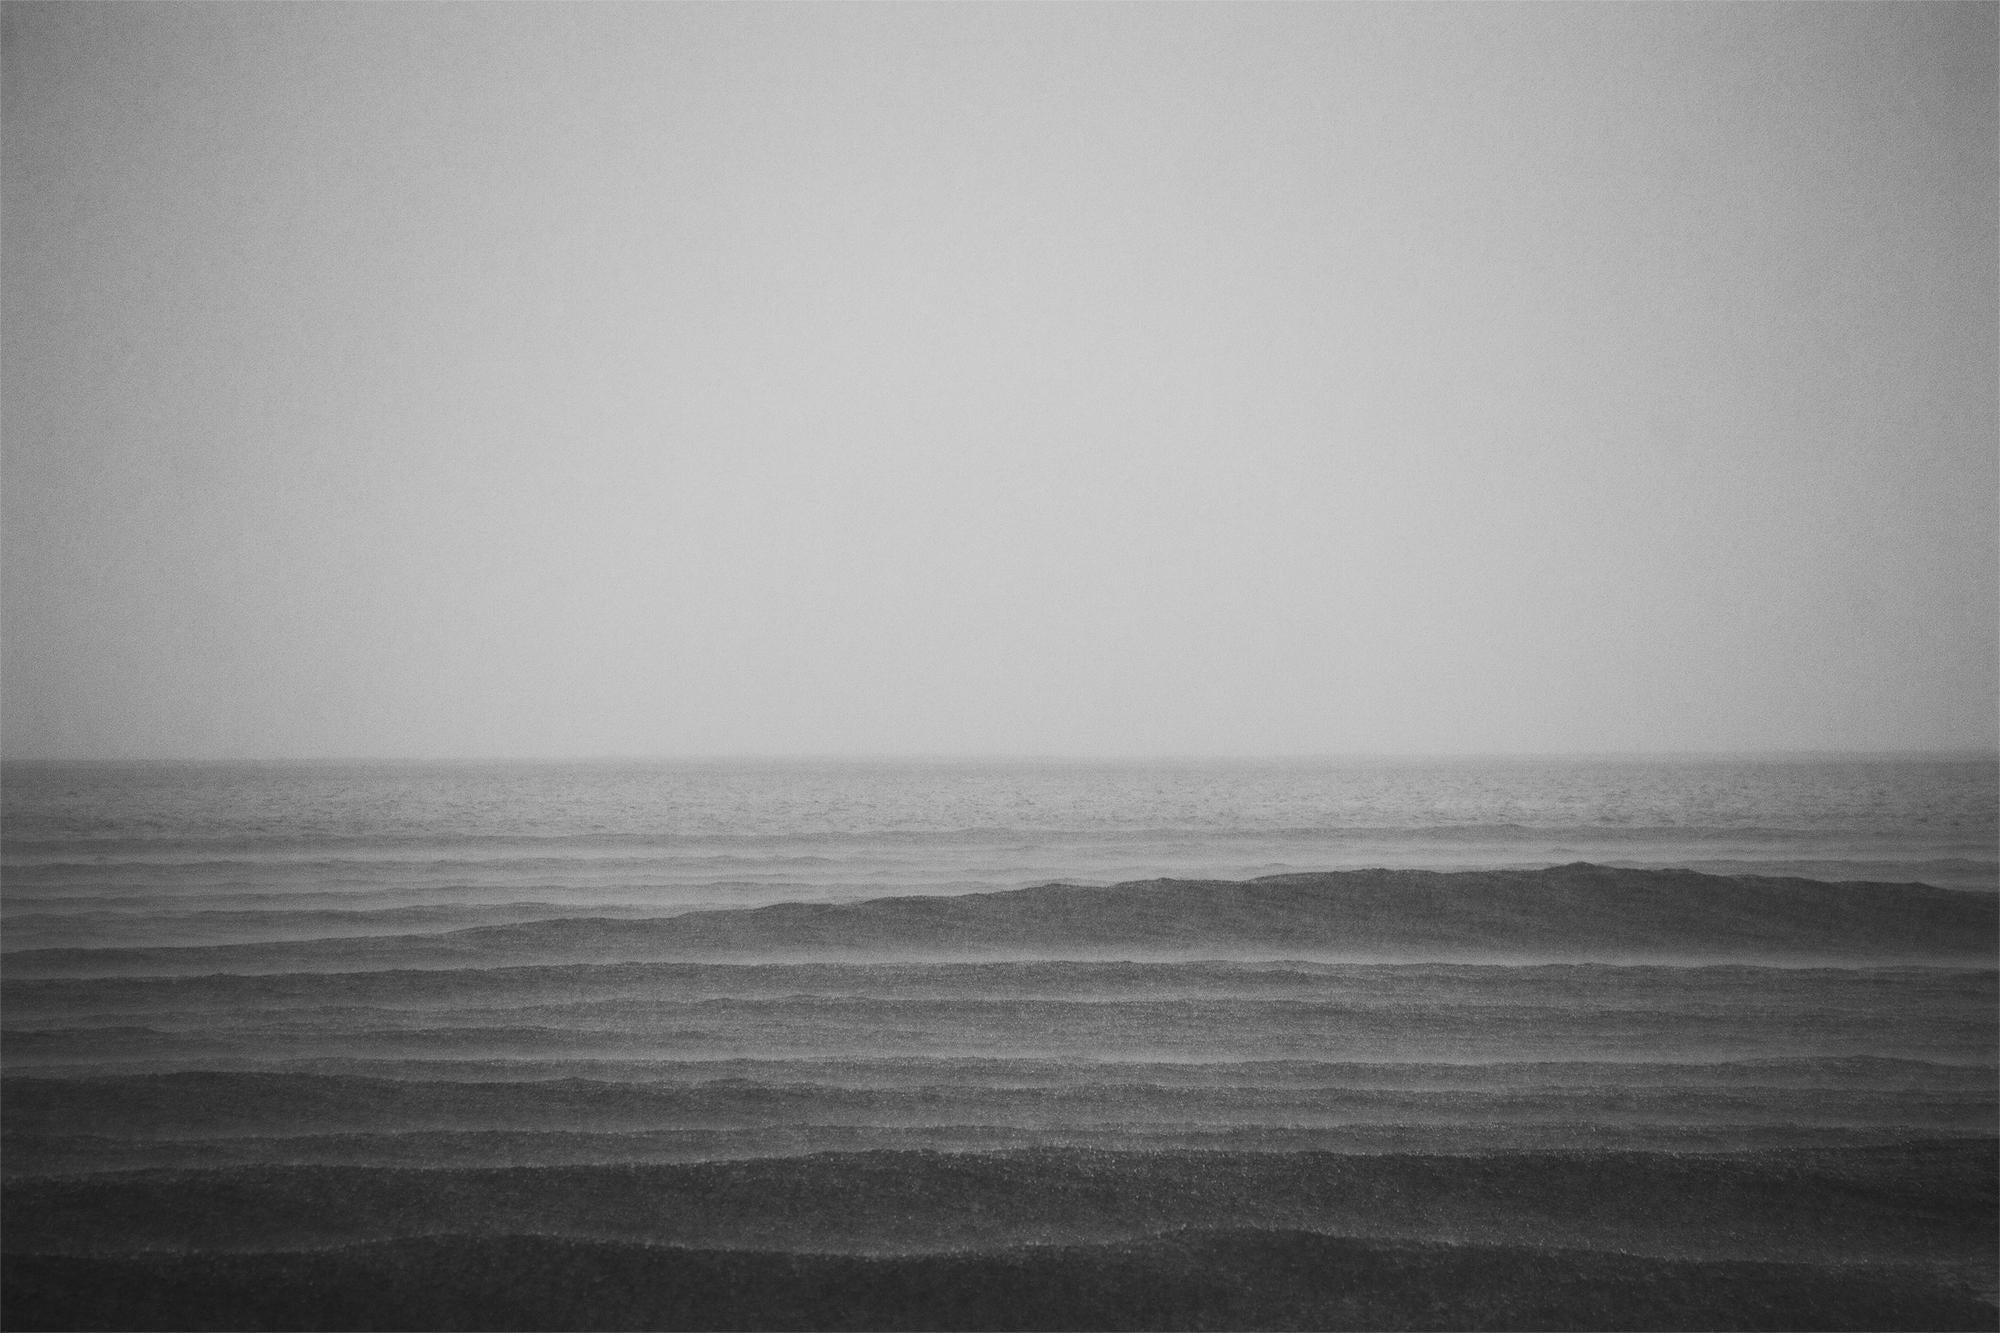 Stuart Möller Landscape Photograph - ' Seascape I '  Signed Limited Edition Oversize print